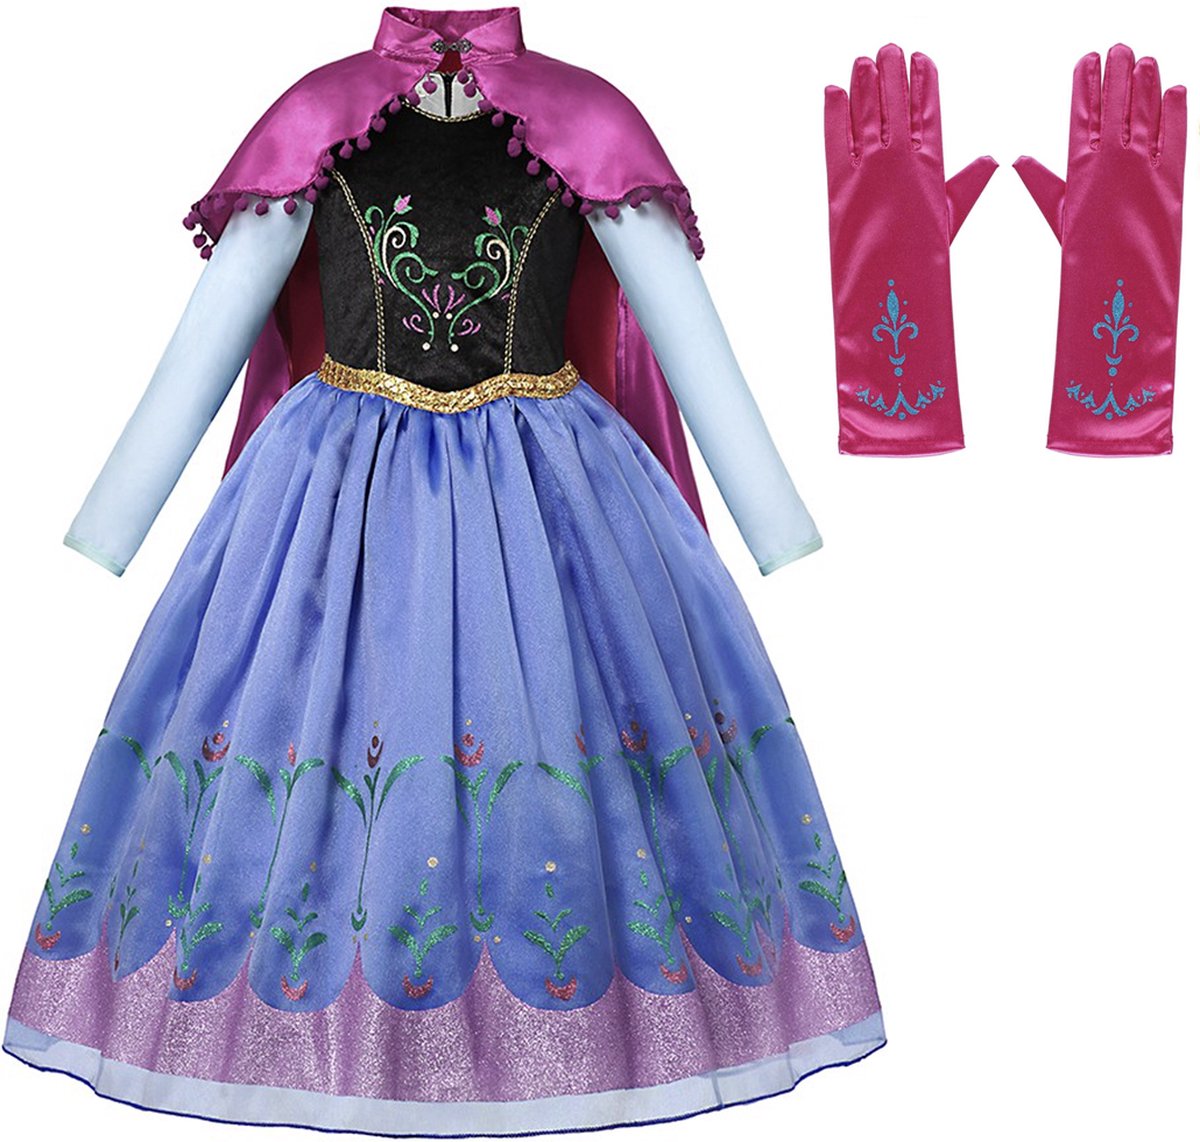 Prinsessenjurk meisje - Prinsessen speelgoed - verkleedkleding meisje - Het Betere Merk - Lange roze cape - Maat 146/152 (150) - Carnavalskleding - Cadeau meisje - Verkleedkleren - Kleed